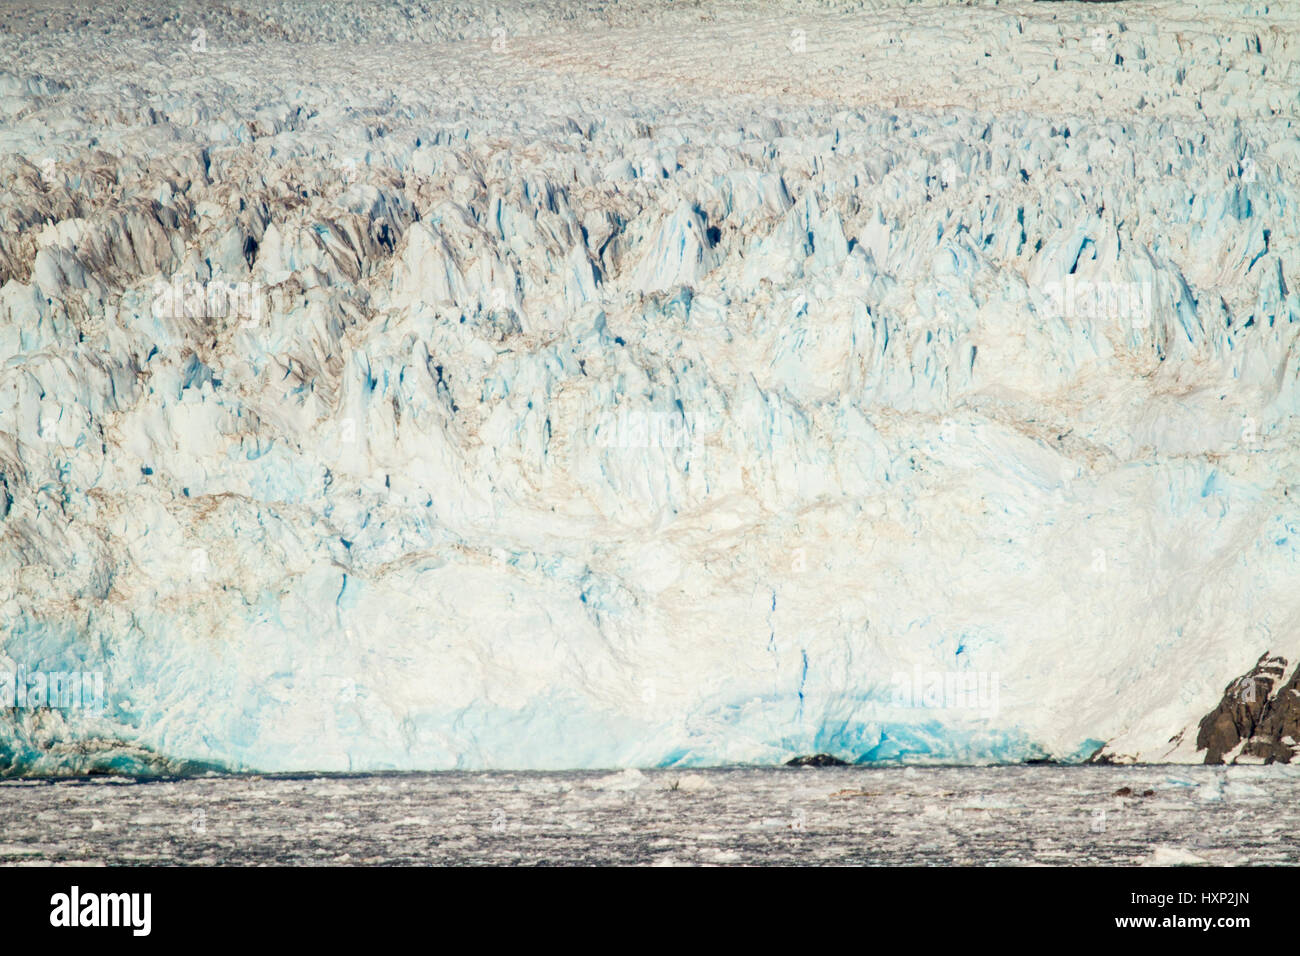 Chili - Amalia Glacier sur le bord du canal Sarmiento - Glacier Skua - Parc National Bernardo O'Higgins Banque D'Images